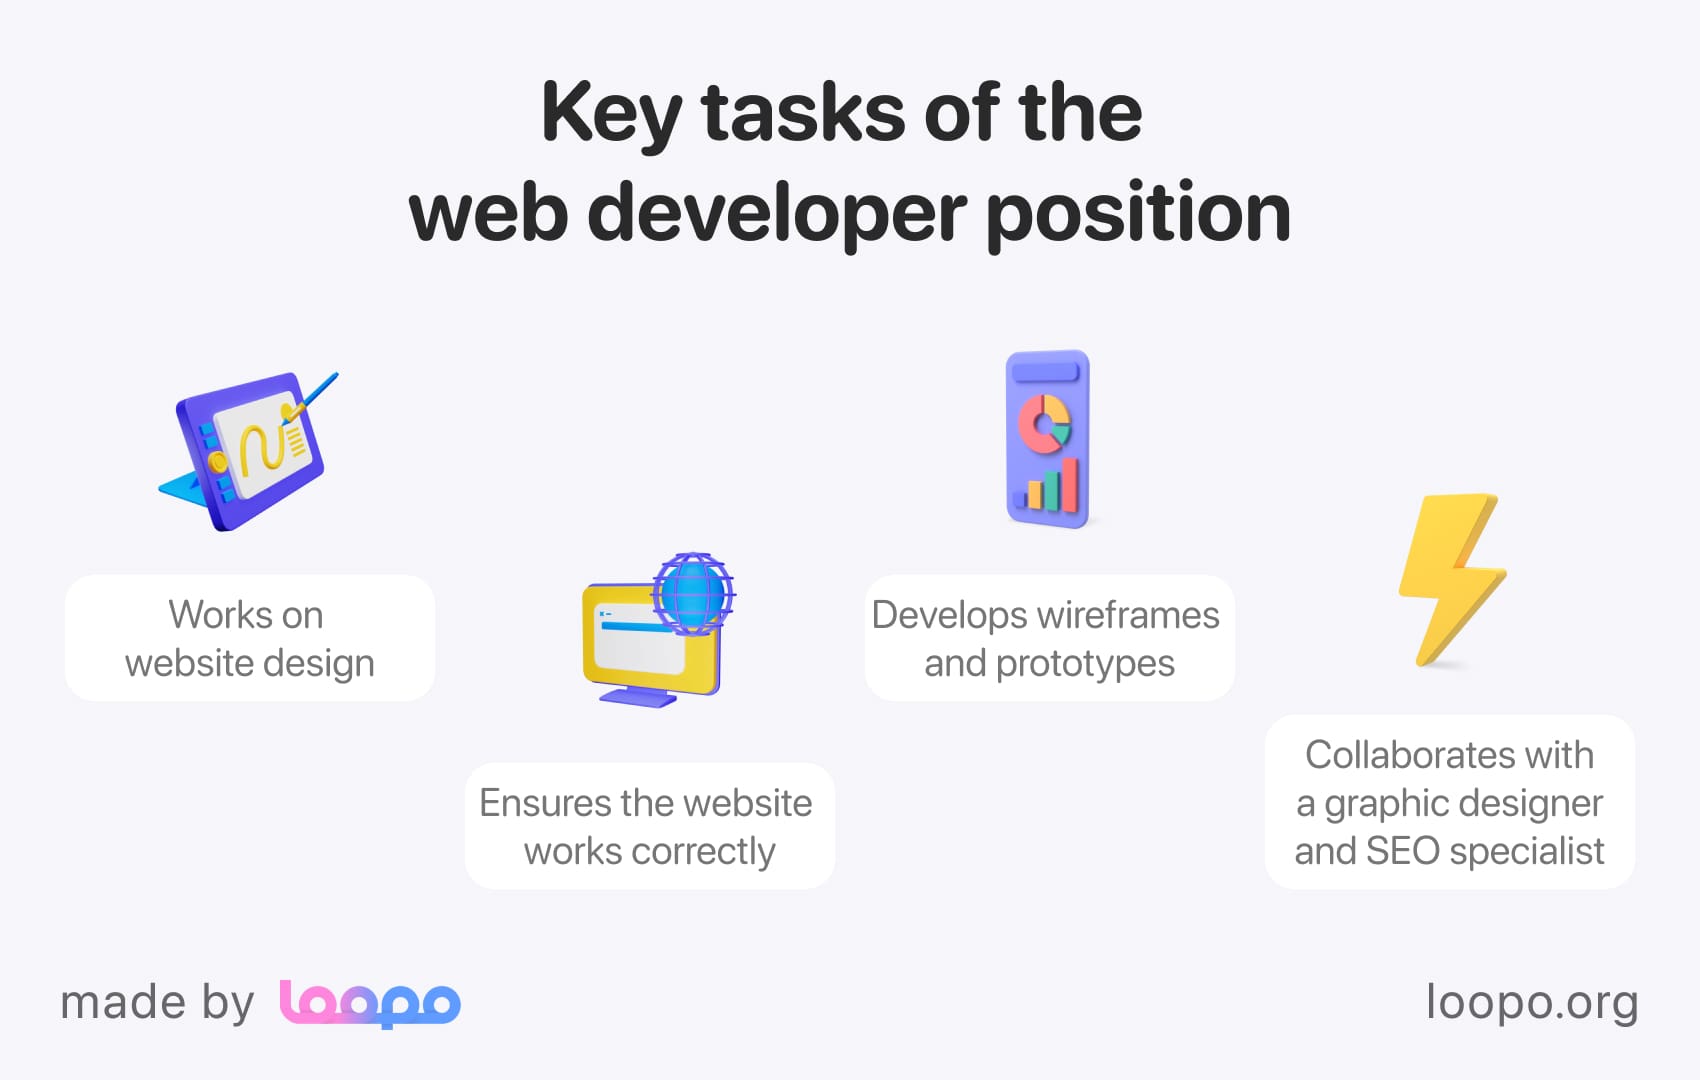 Web developer's main responsibilities